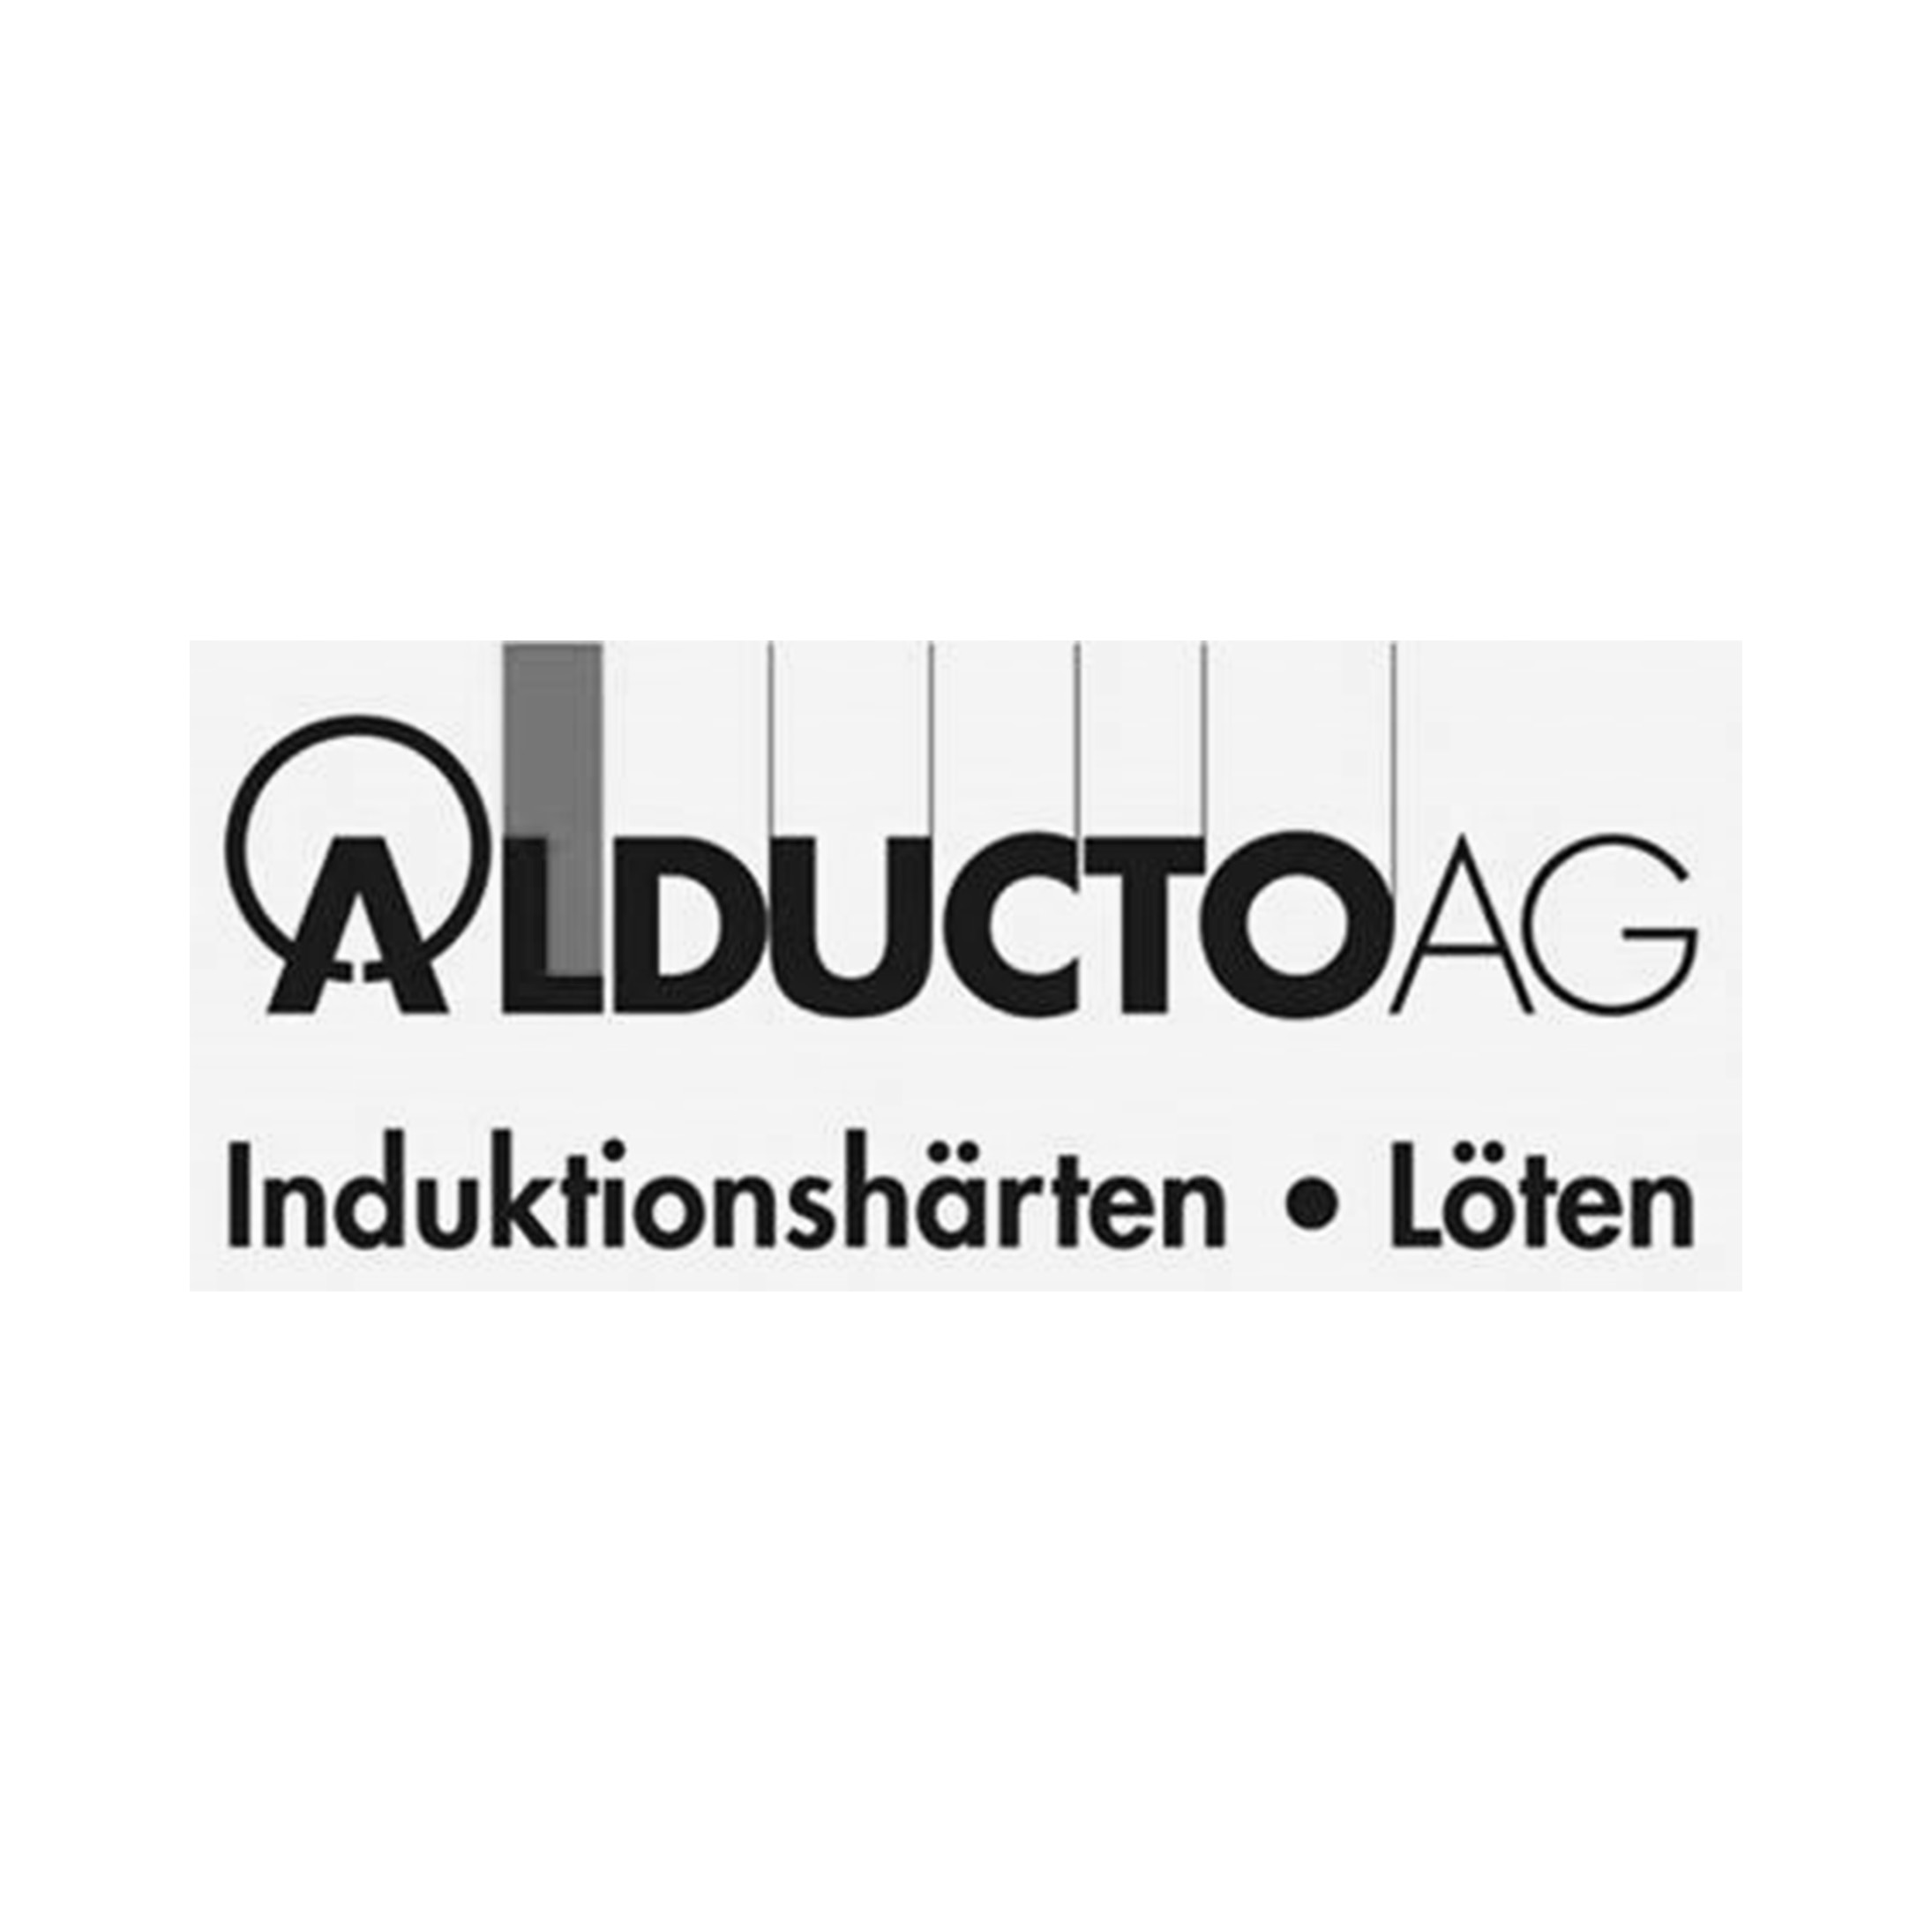 ASC_Logo_Kunden_Alducto